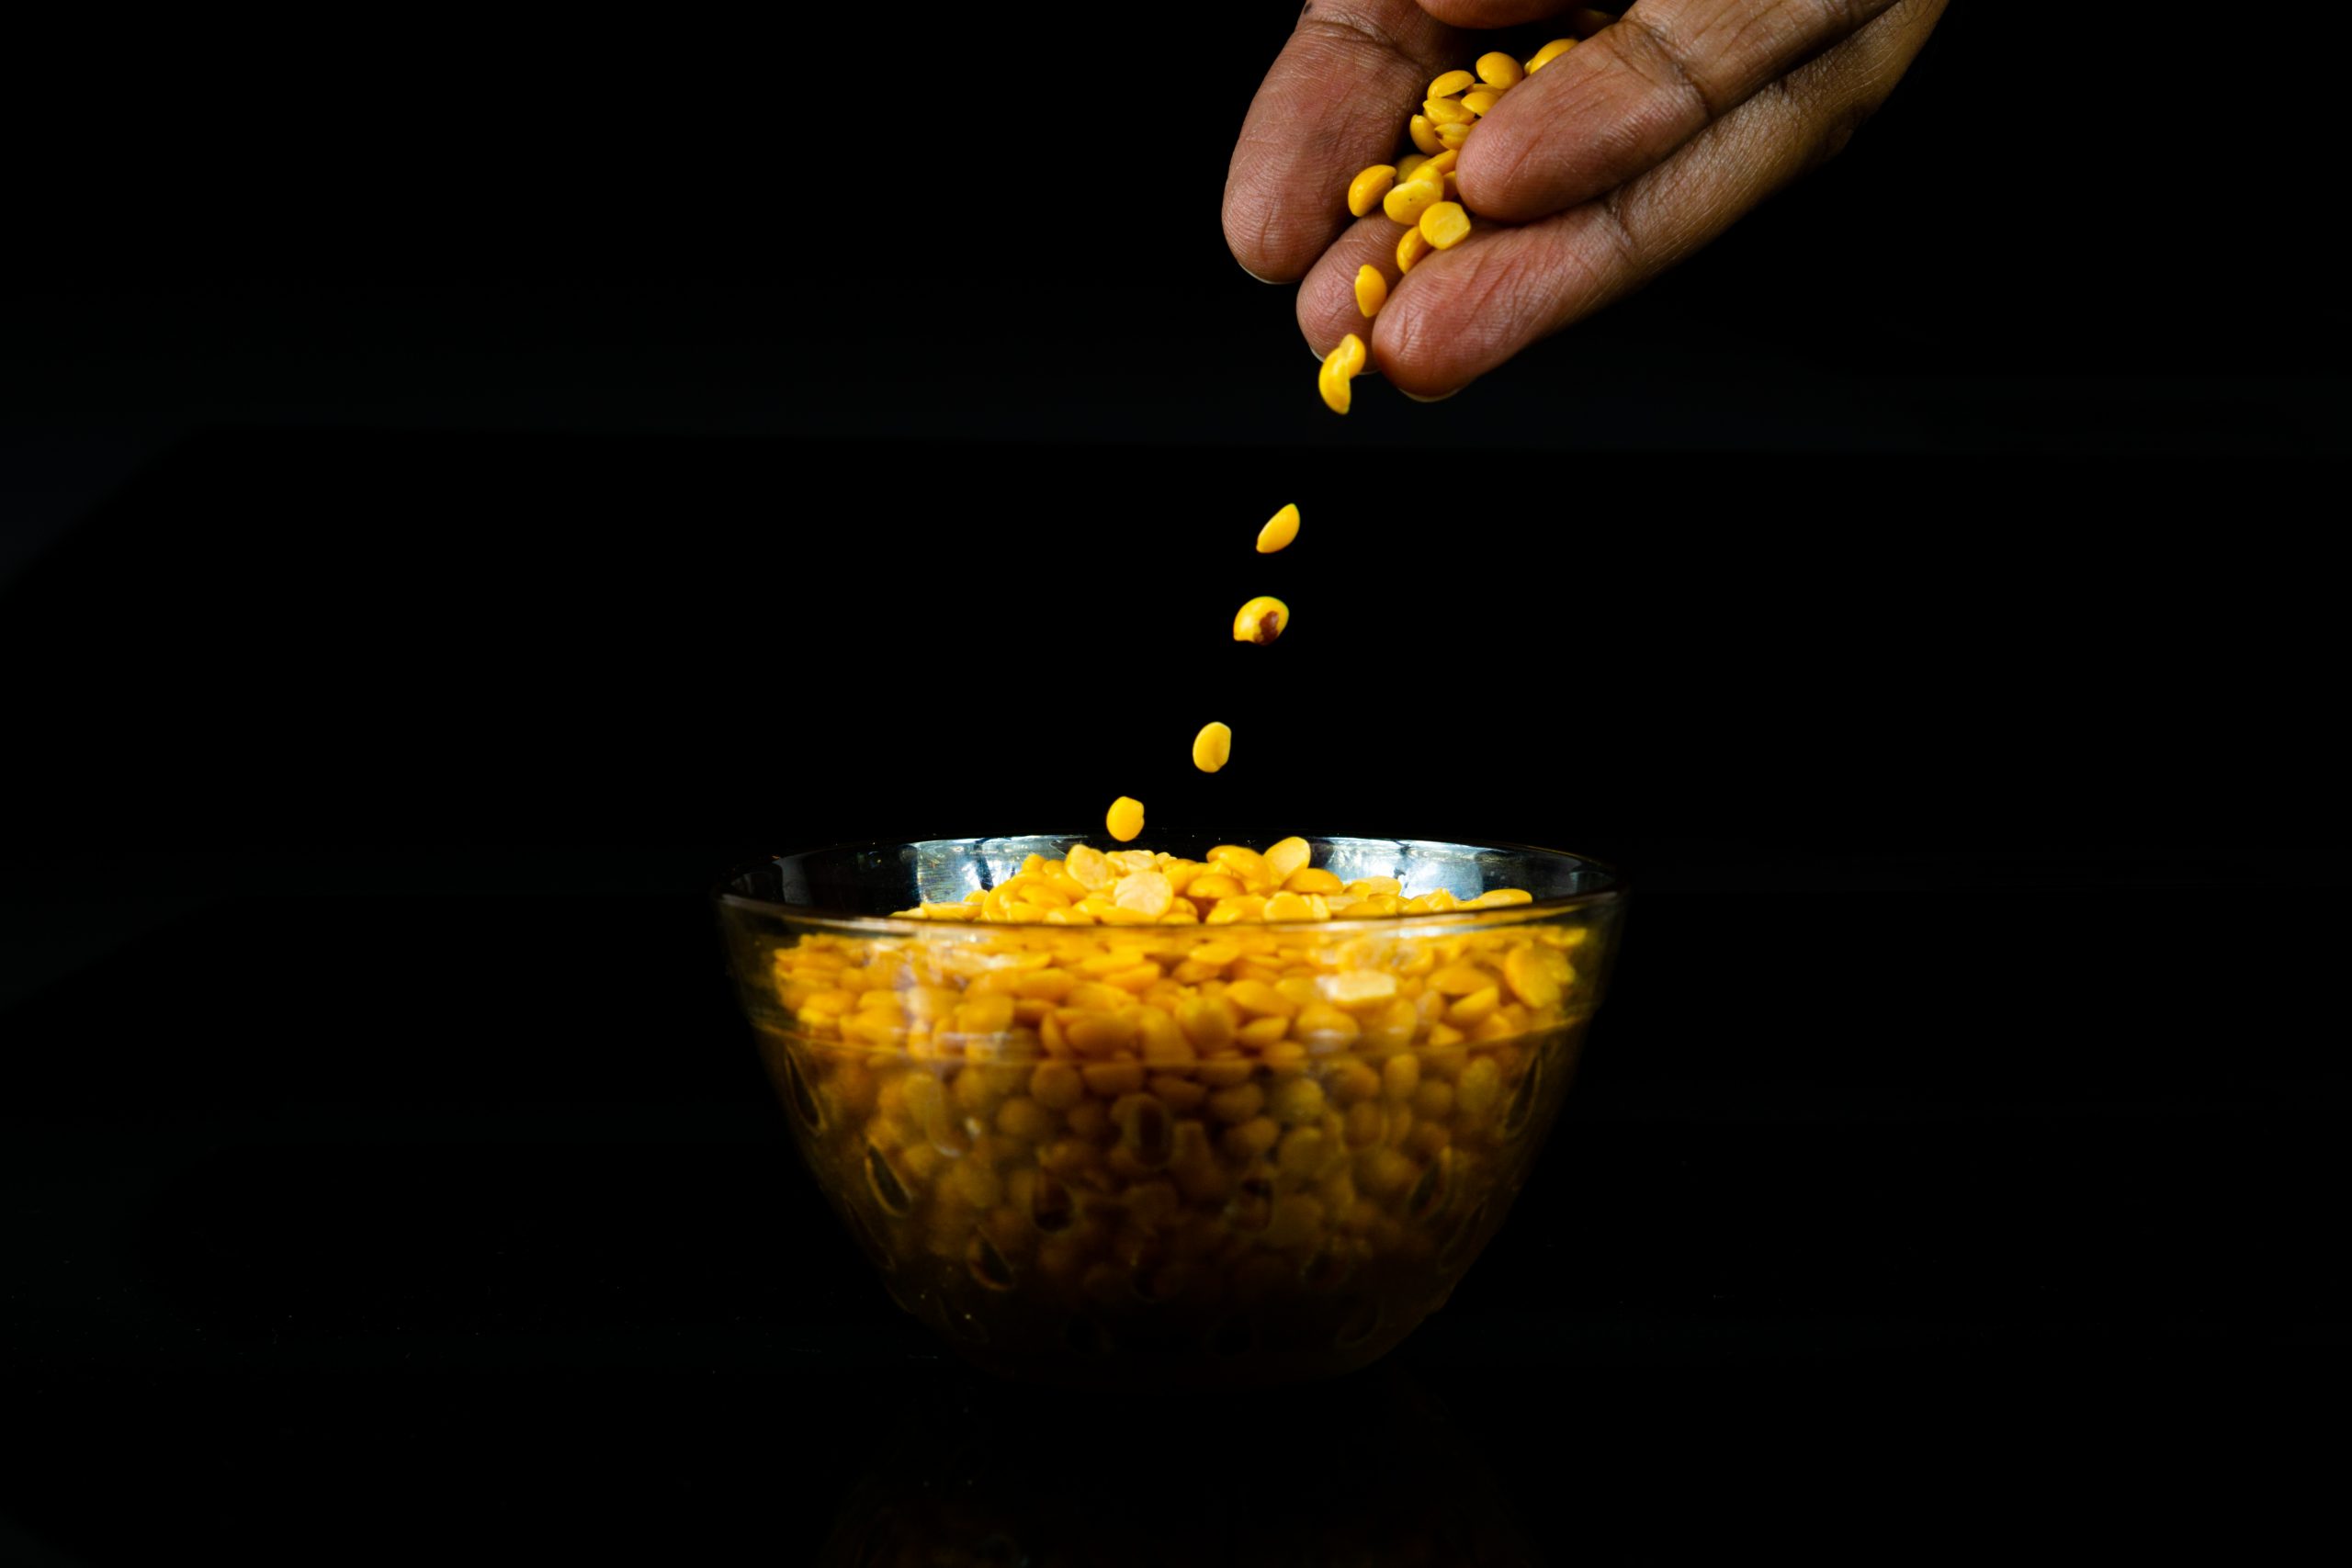 Putting split yellow gram in a bowl